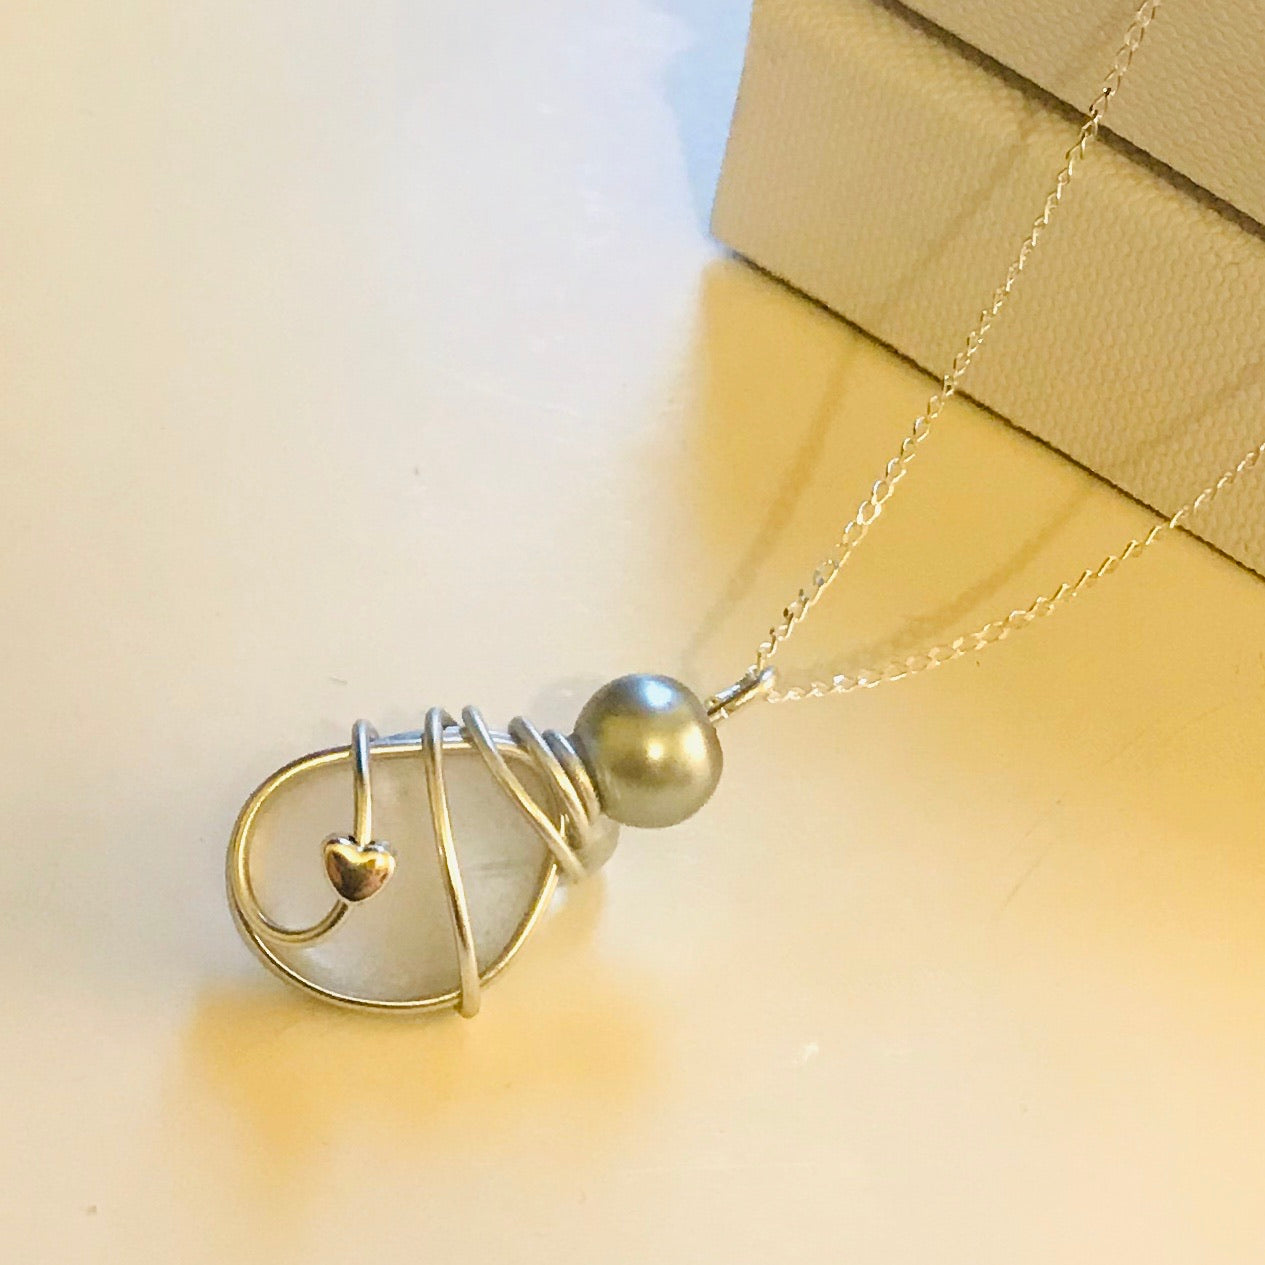 White Seaham Sea Glass Mini Heart Pendant on a 20” Sterling silver chain